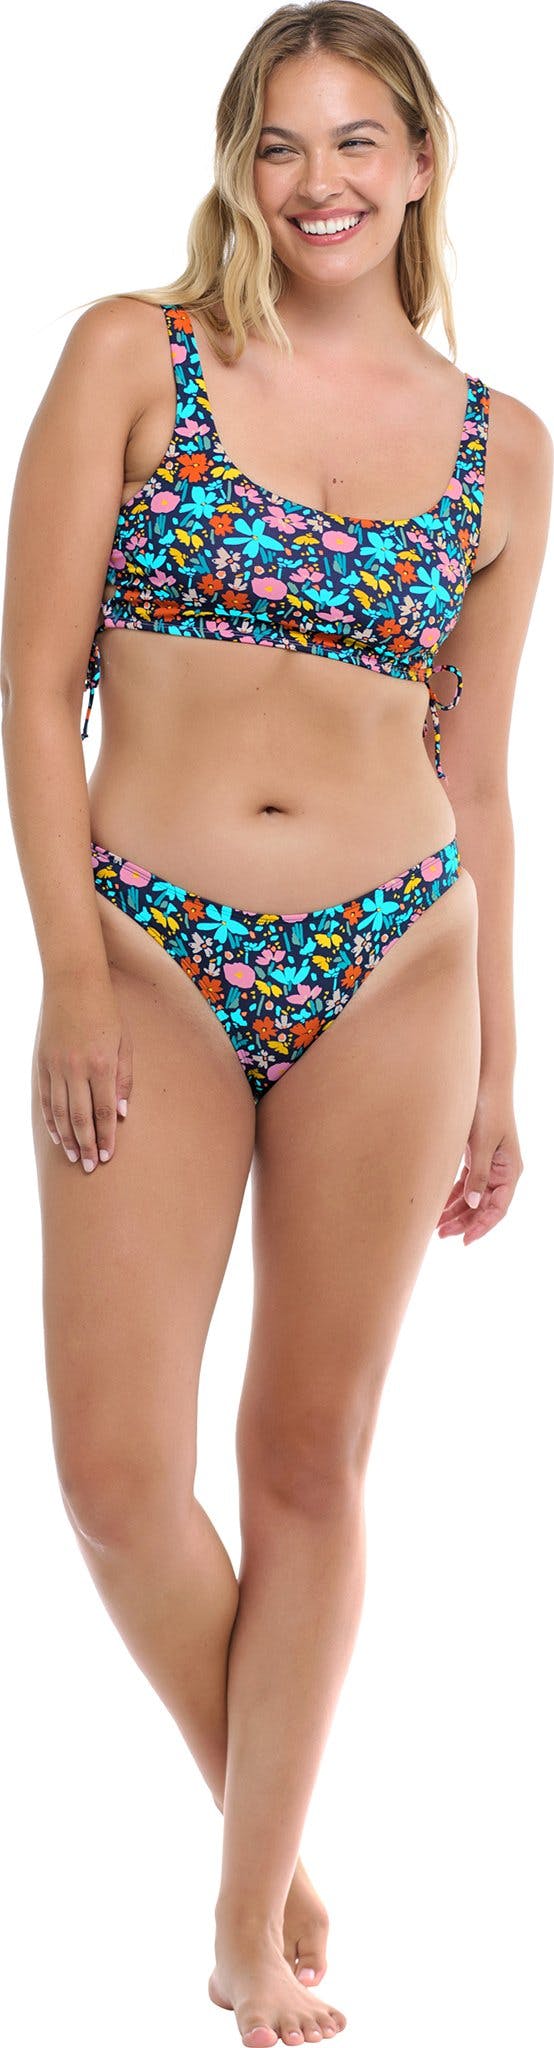 Product image for Vivid Field Maxim Scoop Neck Bikini Top - Women's